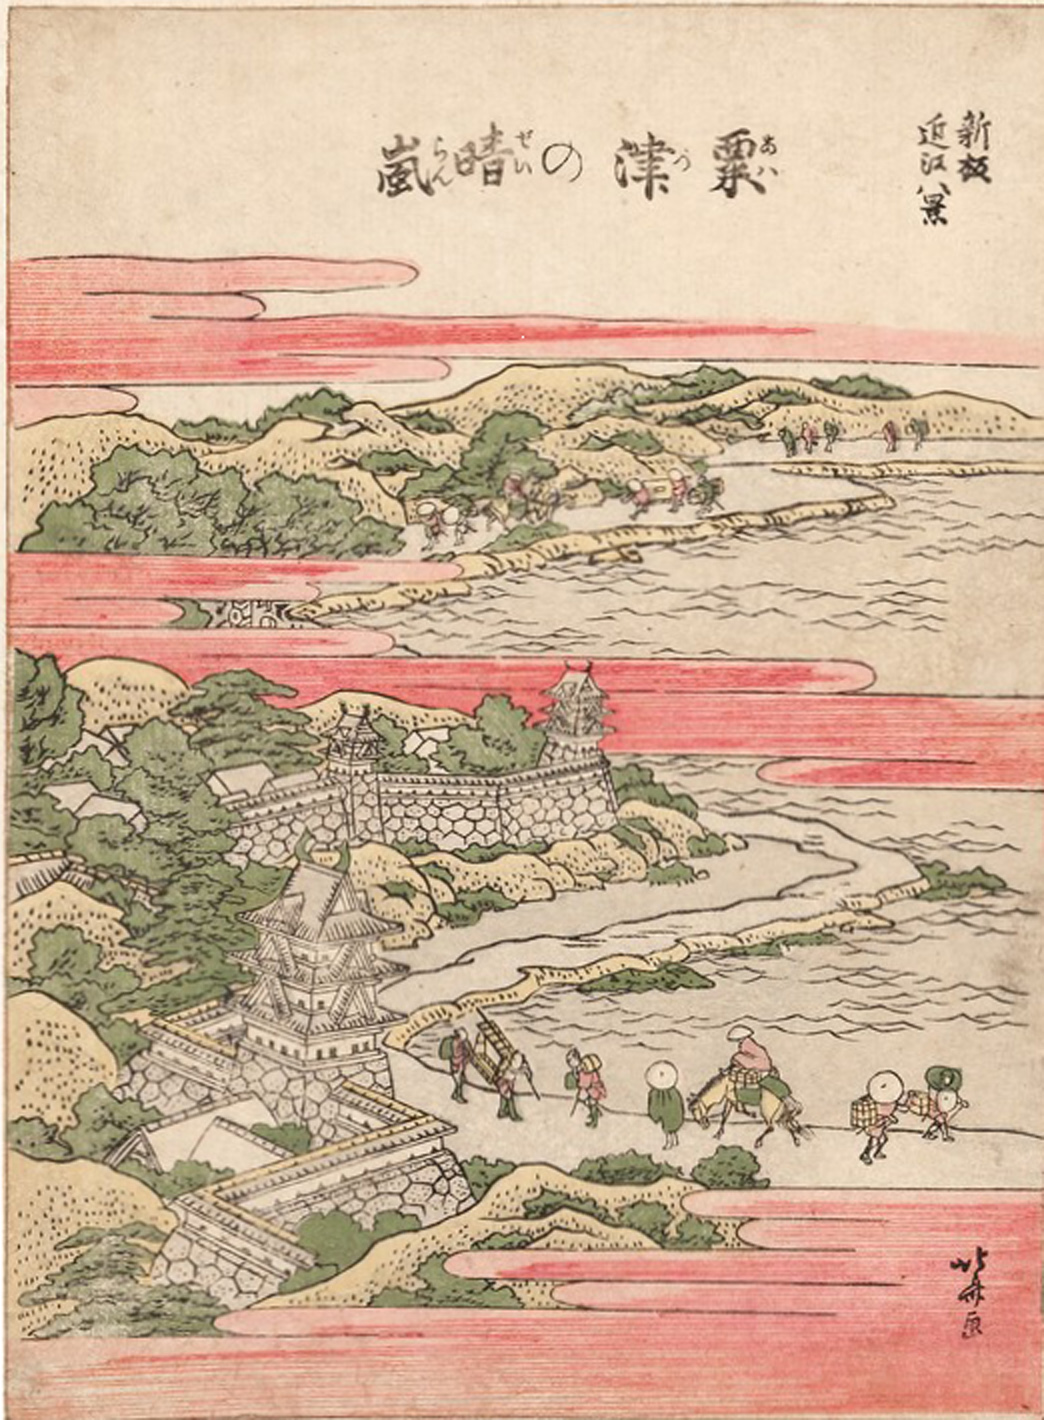 Hokusai - Clearing Weather at Awazu - 1802 Vertical Edition